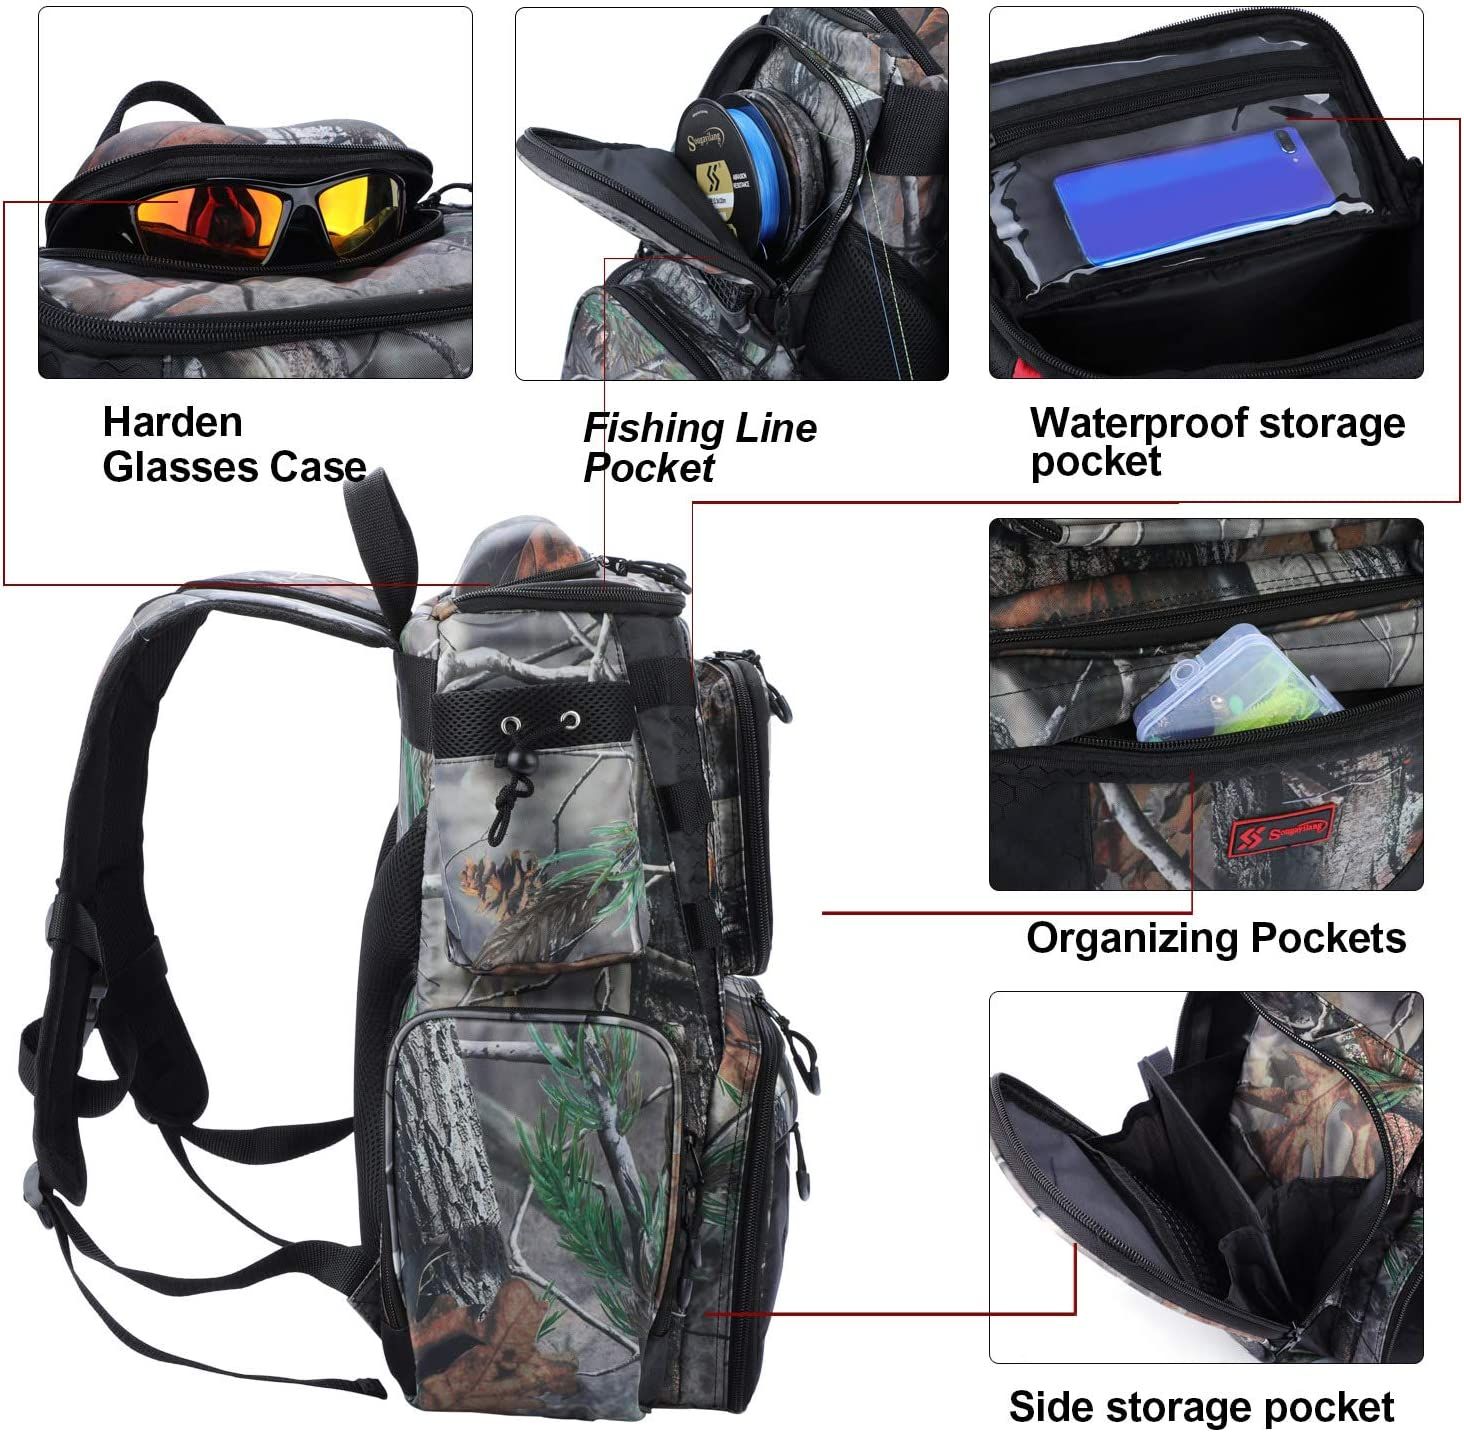 Sougayilang Portable Waterproof Double-Layer Camo Fishing Rod Bag Carr -  Sougayilang